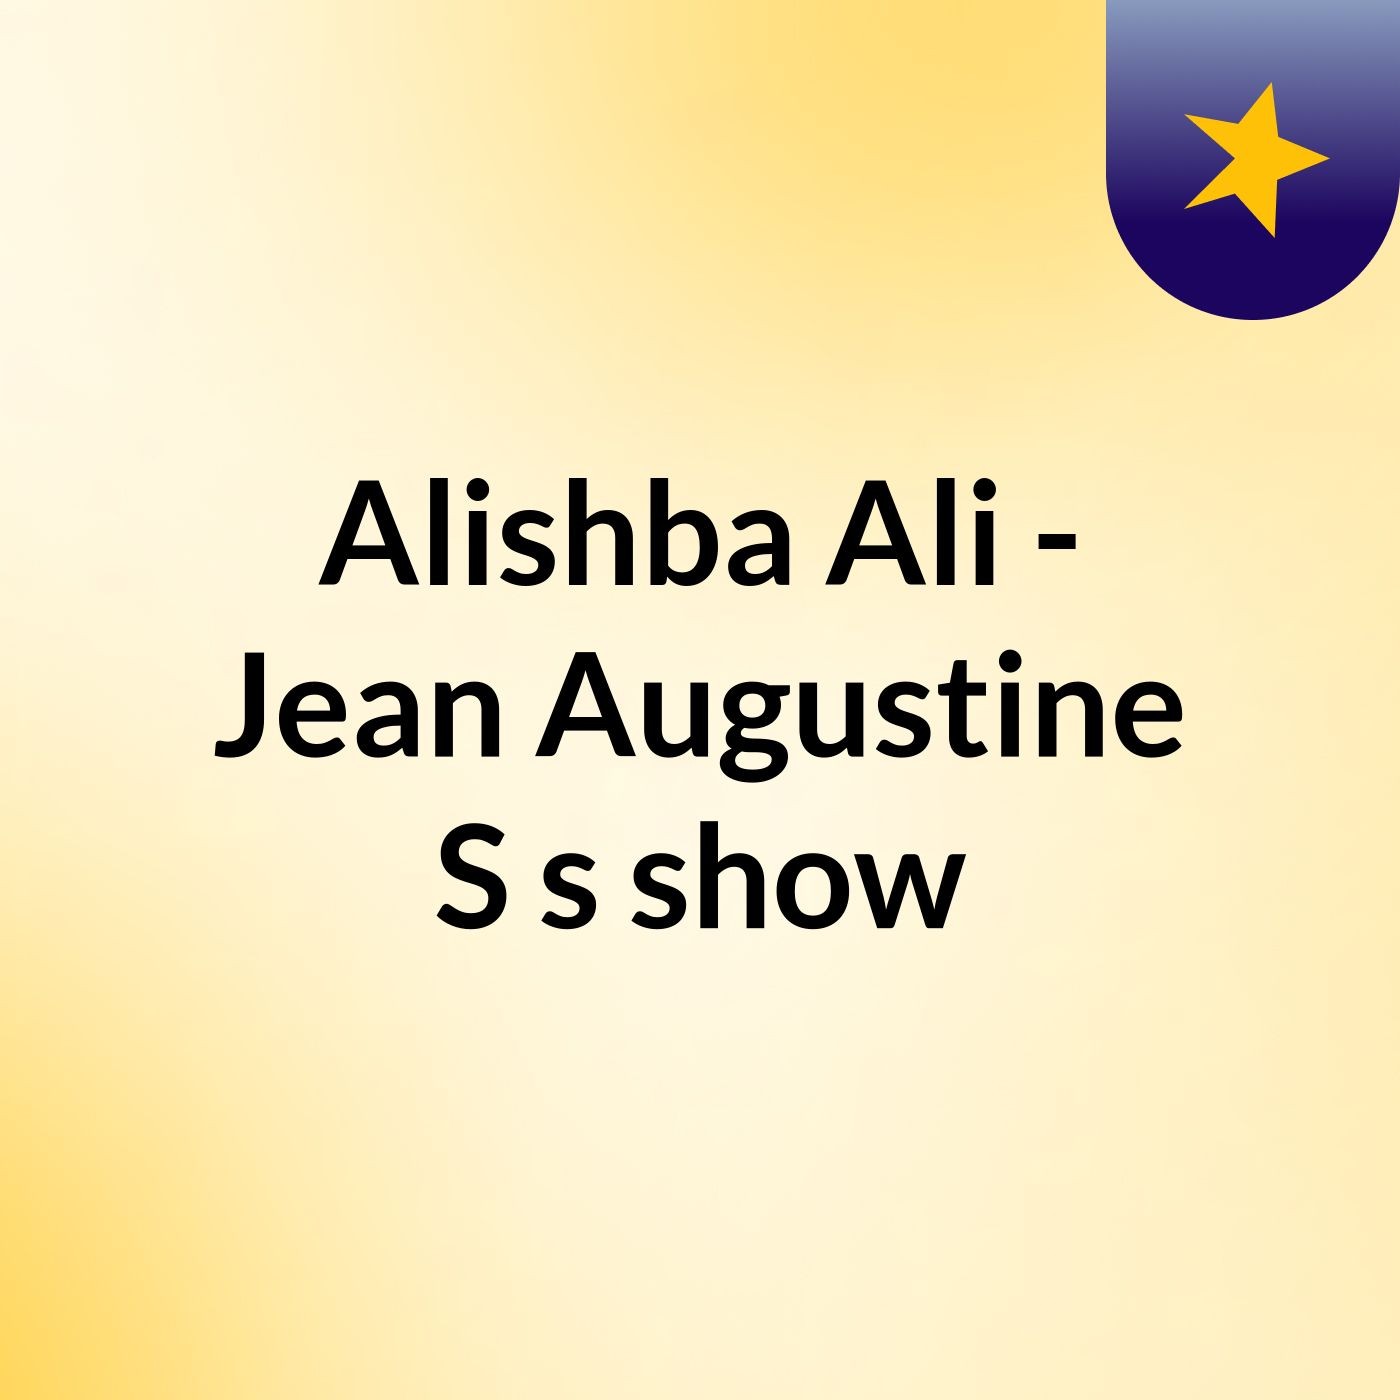 Alishba Ali - Jean Augustine S's show